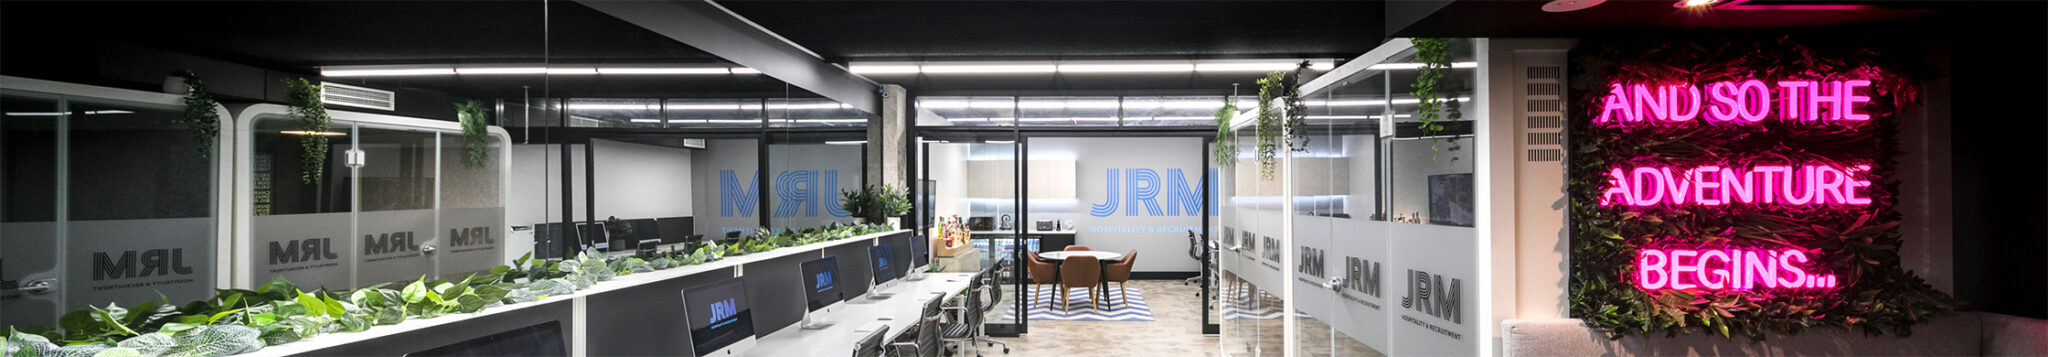 JRM hospitality recruitment agencies_banner